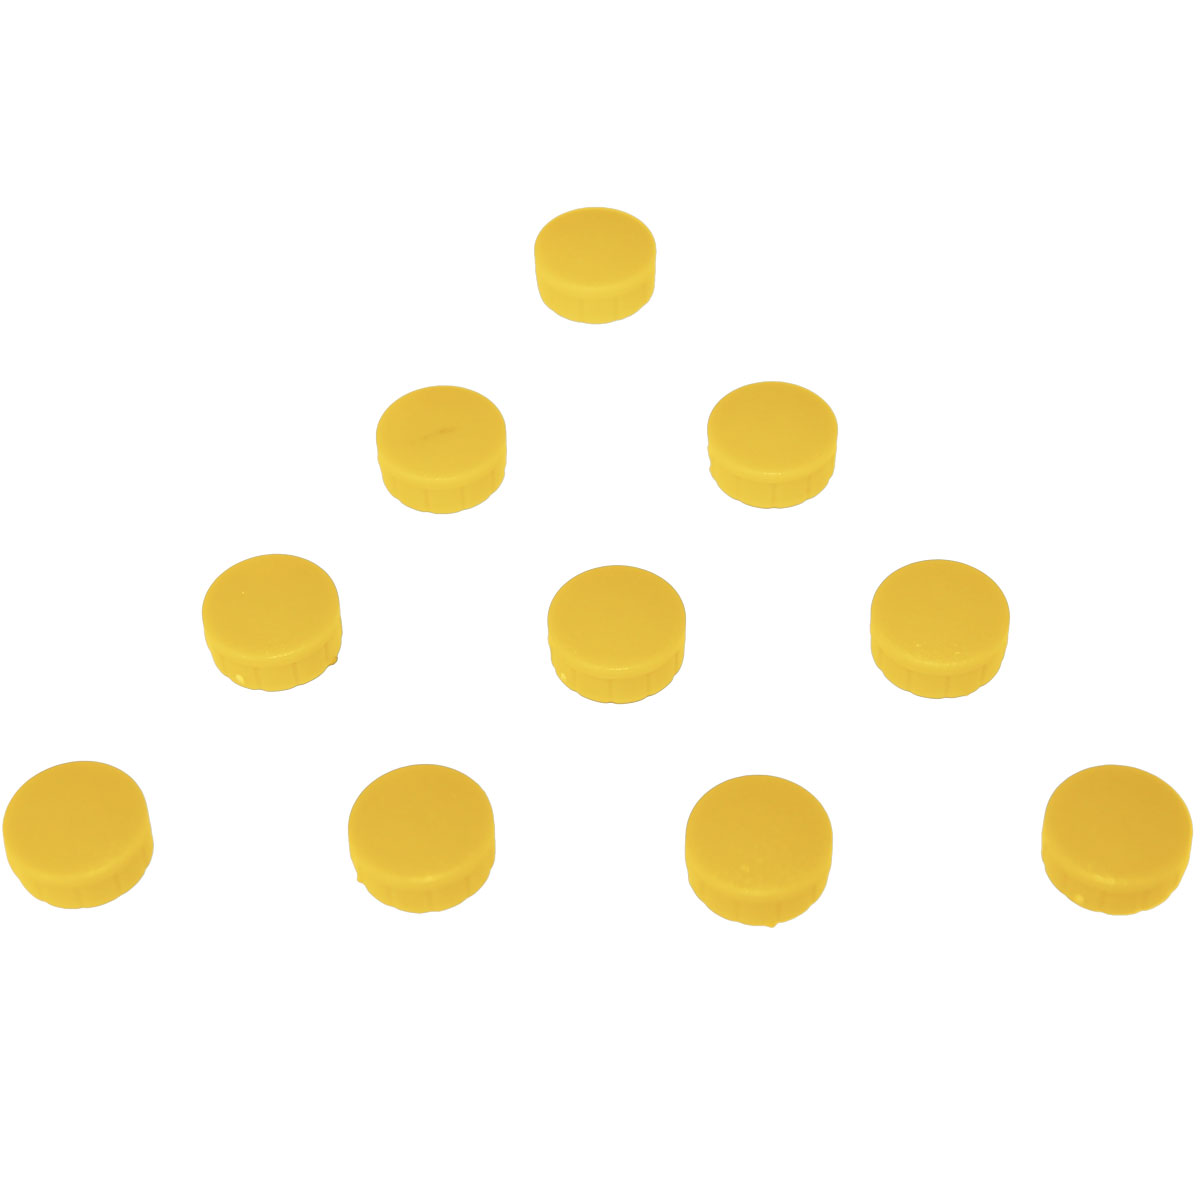 Yellow circle magnets